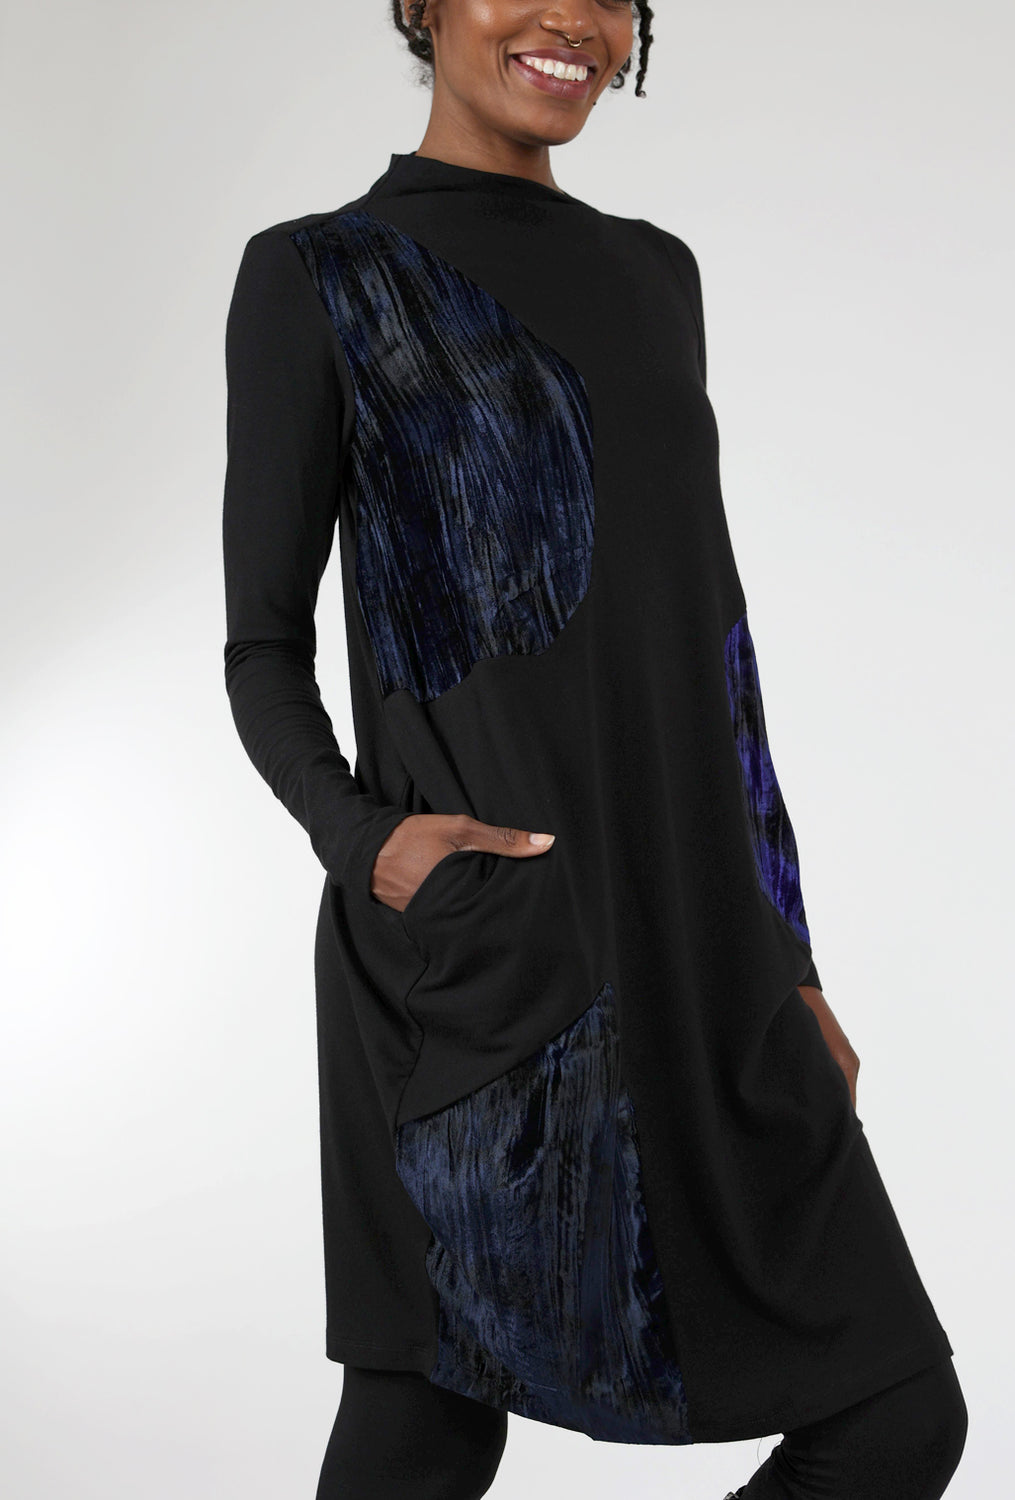 Ozai Purpley Patches Jersey Dress, Black 